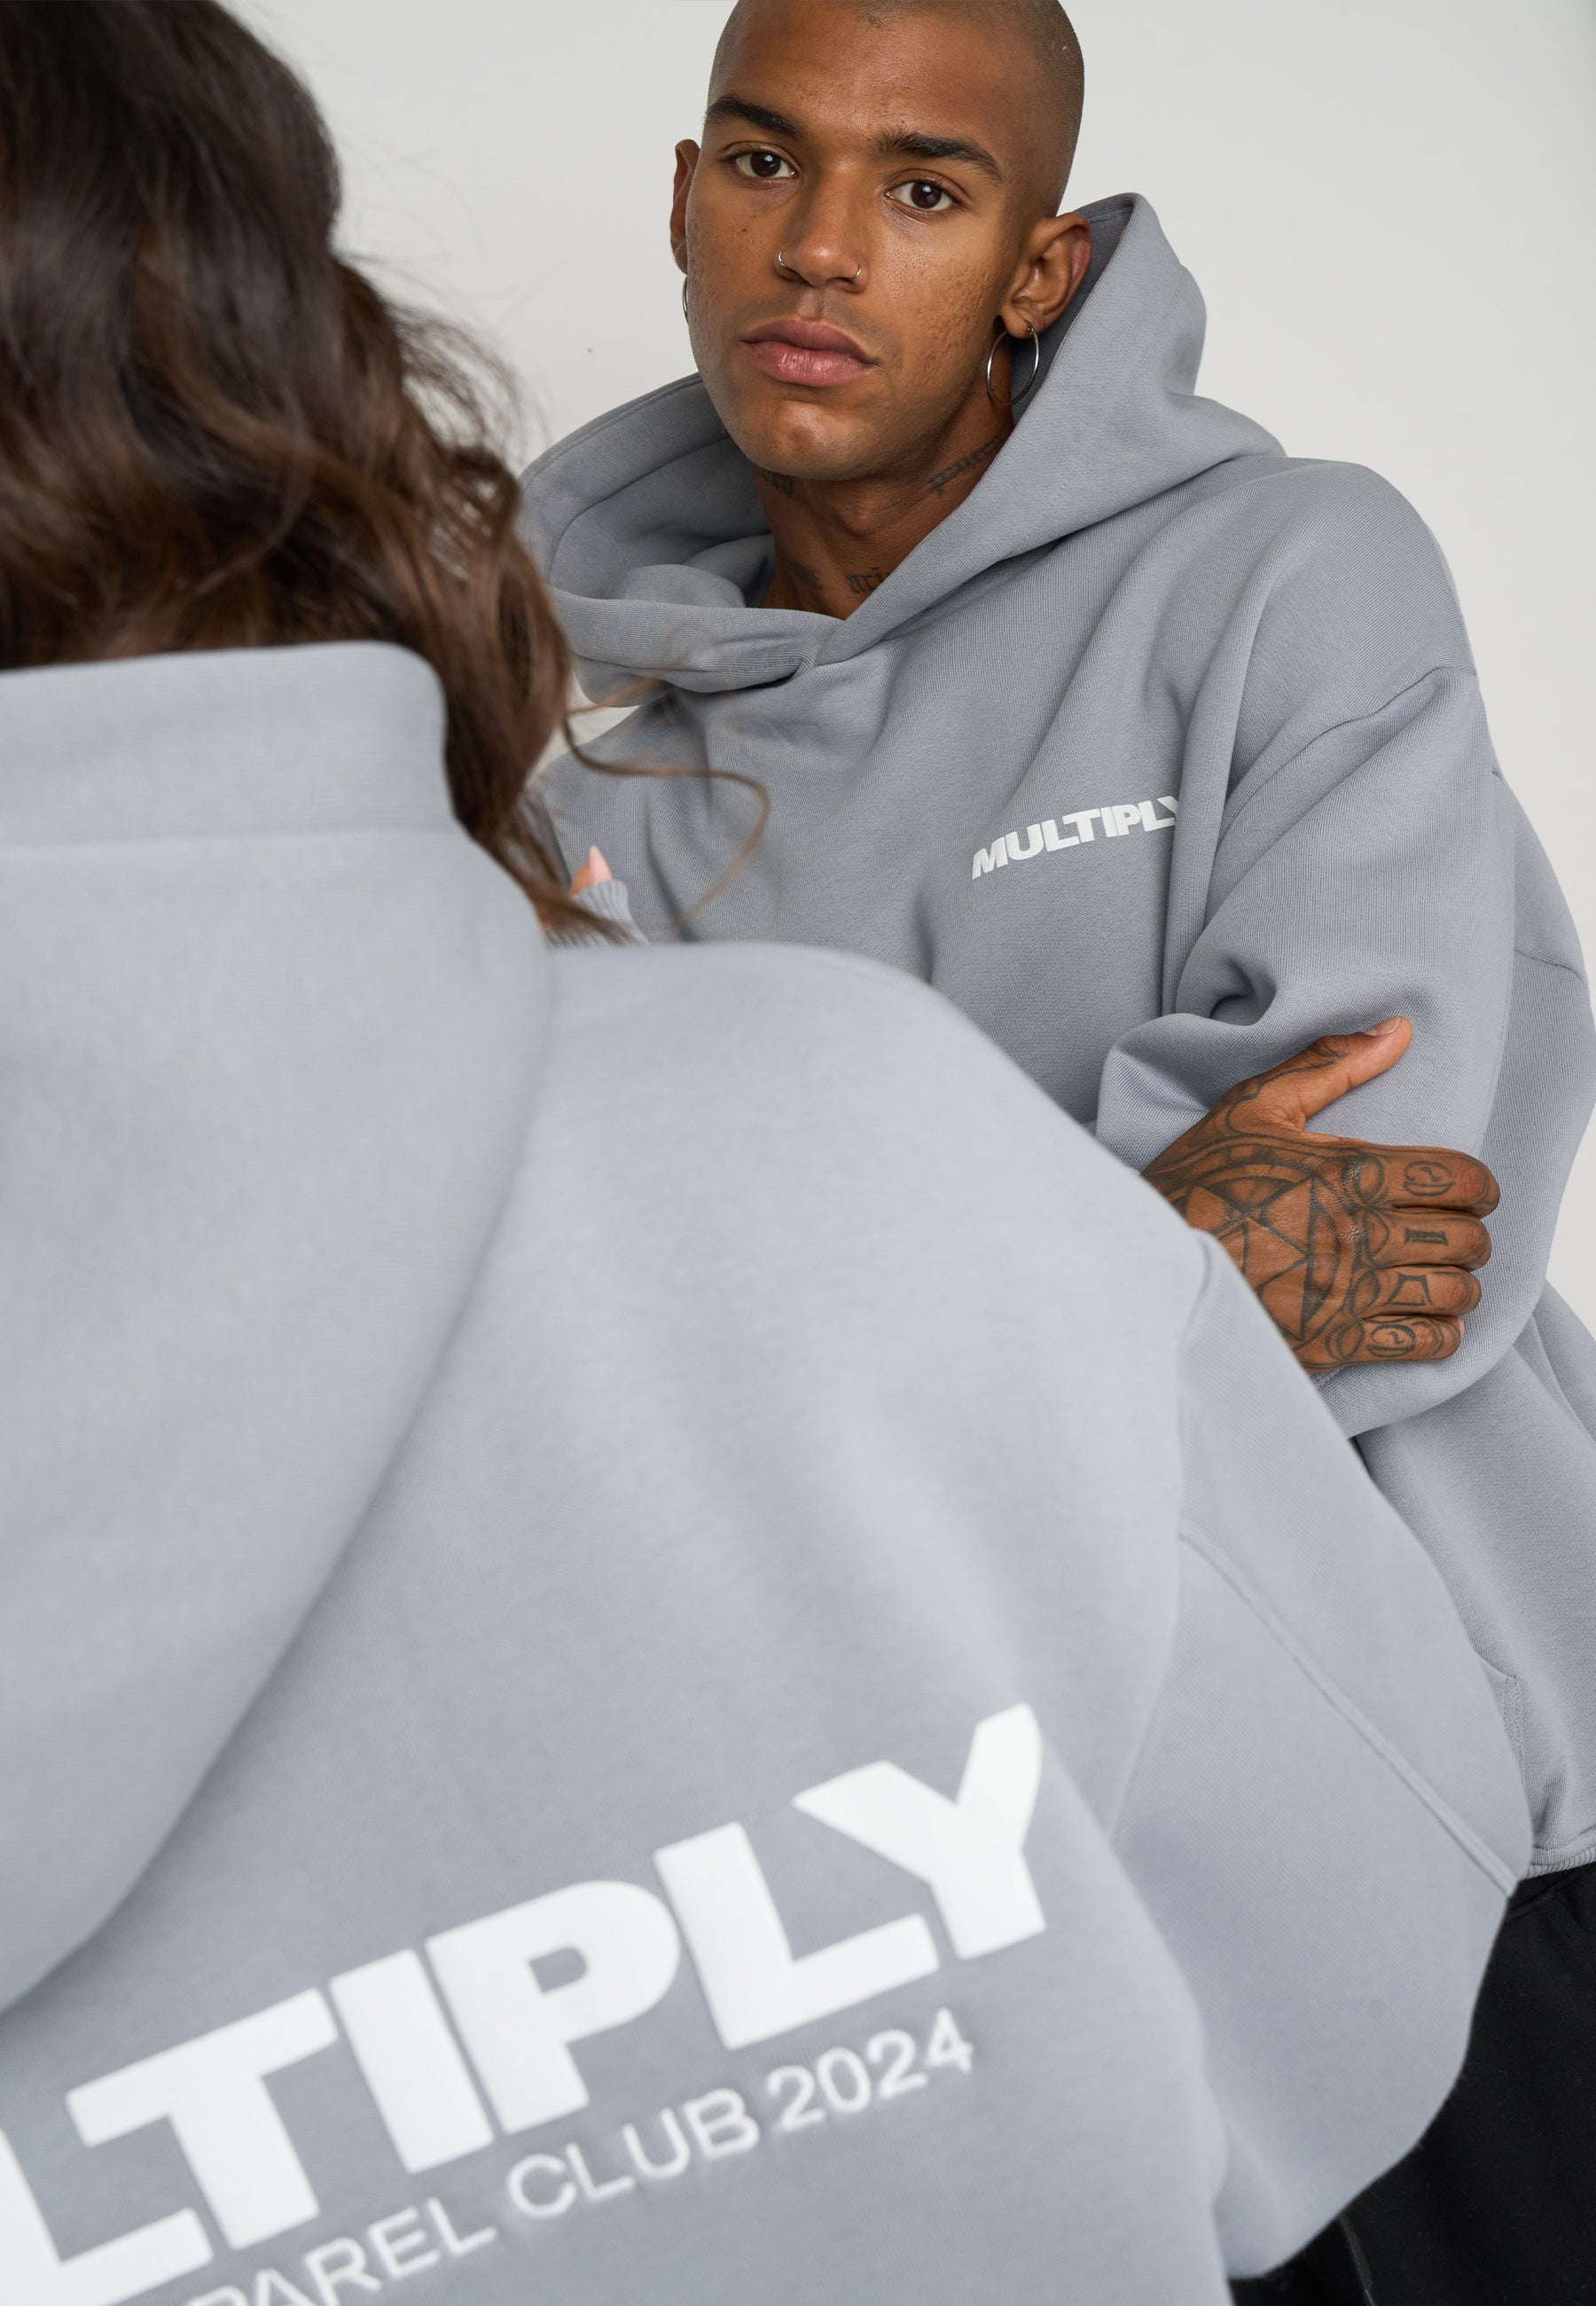 Oversize hoodie MULTIPLY Ultimate Grey